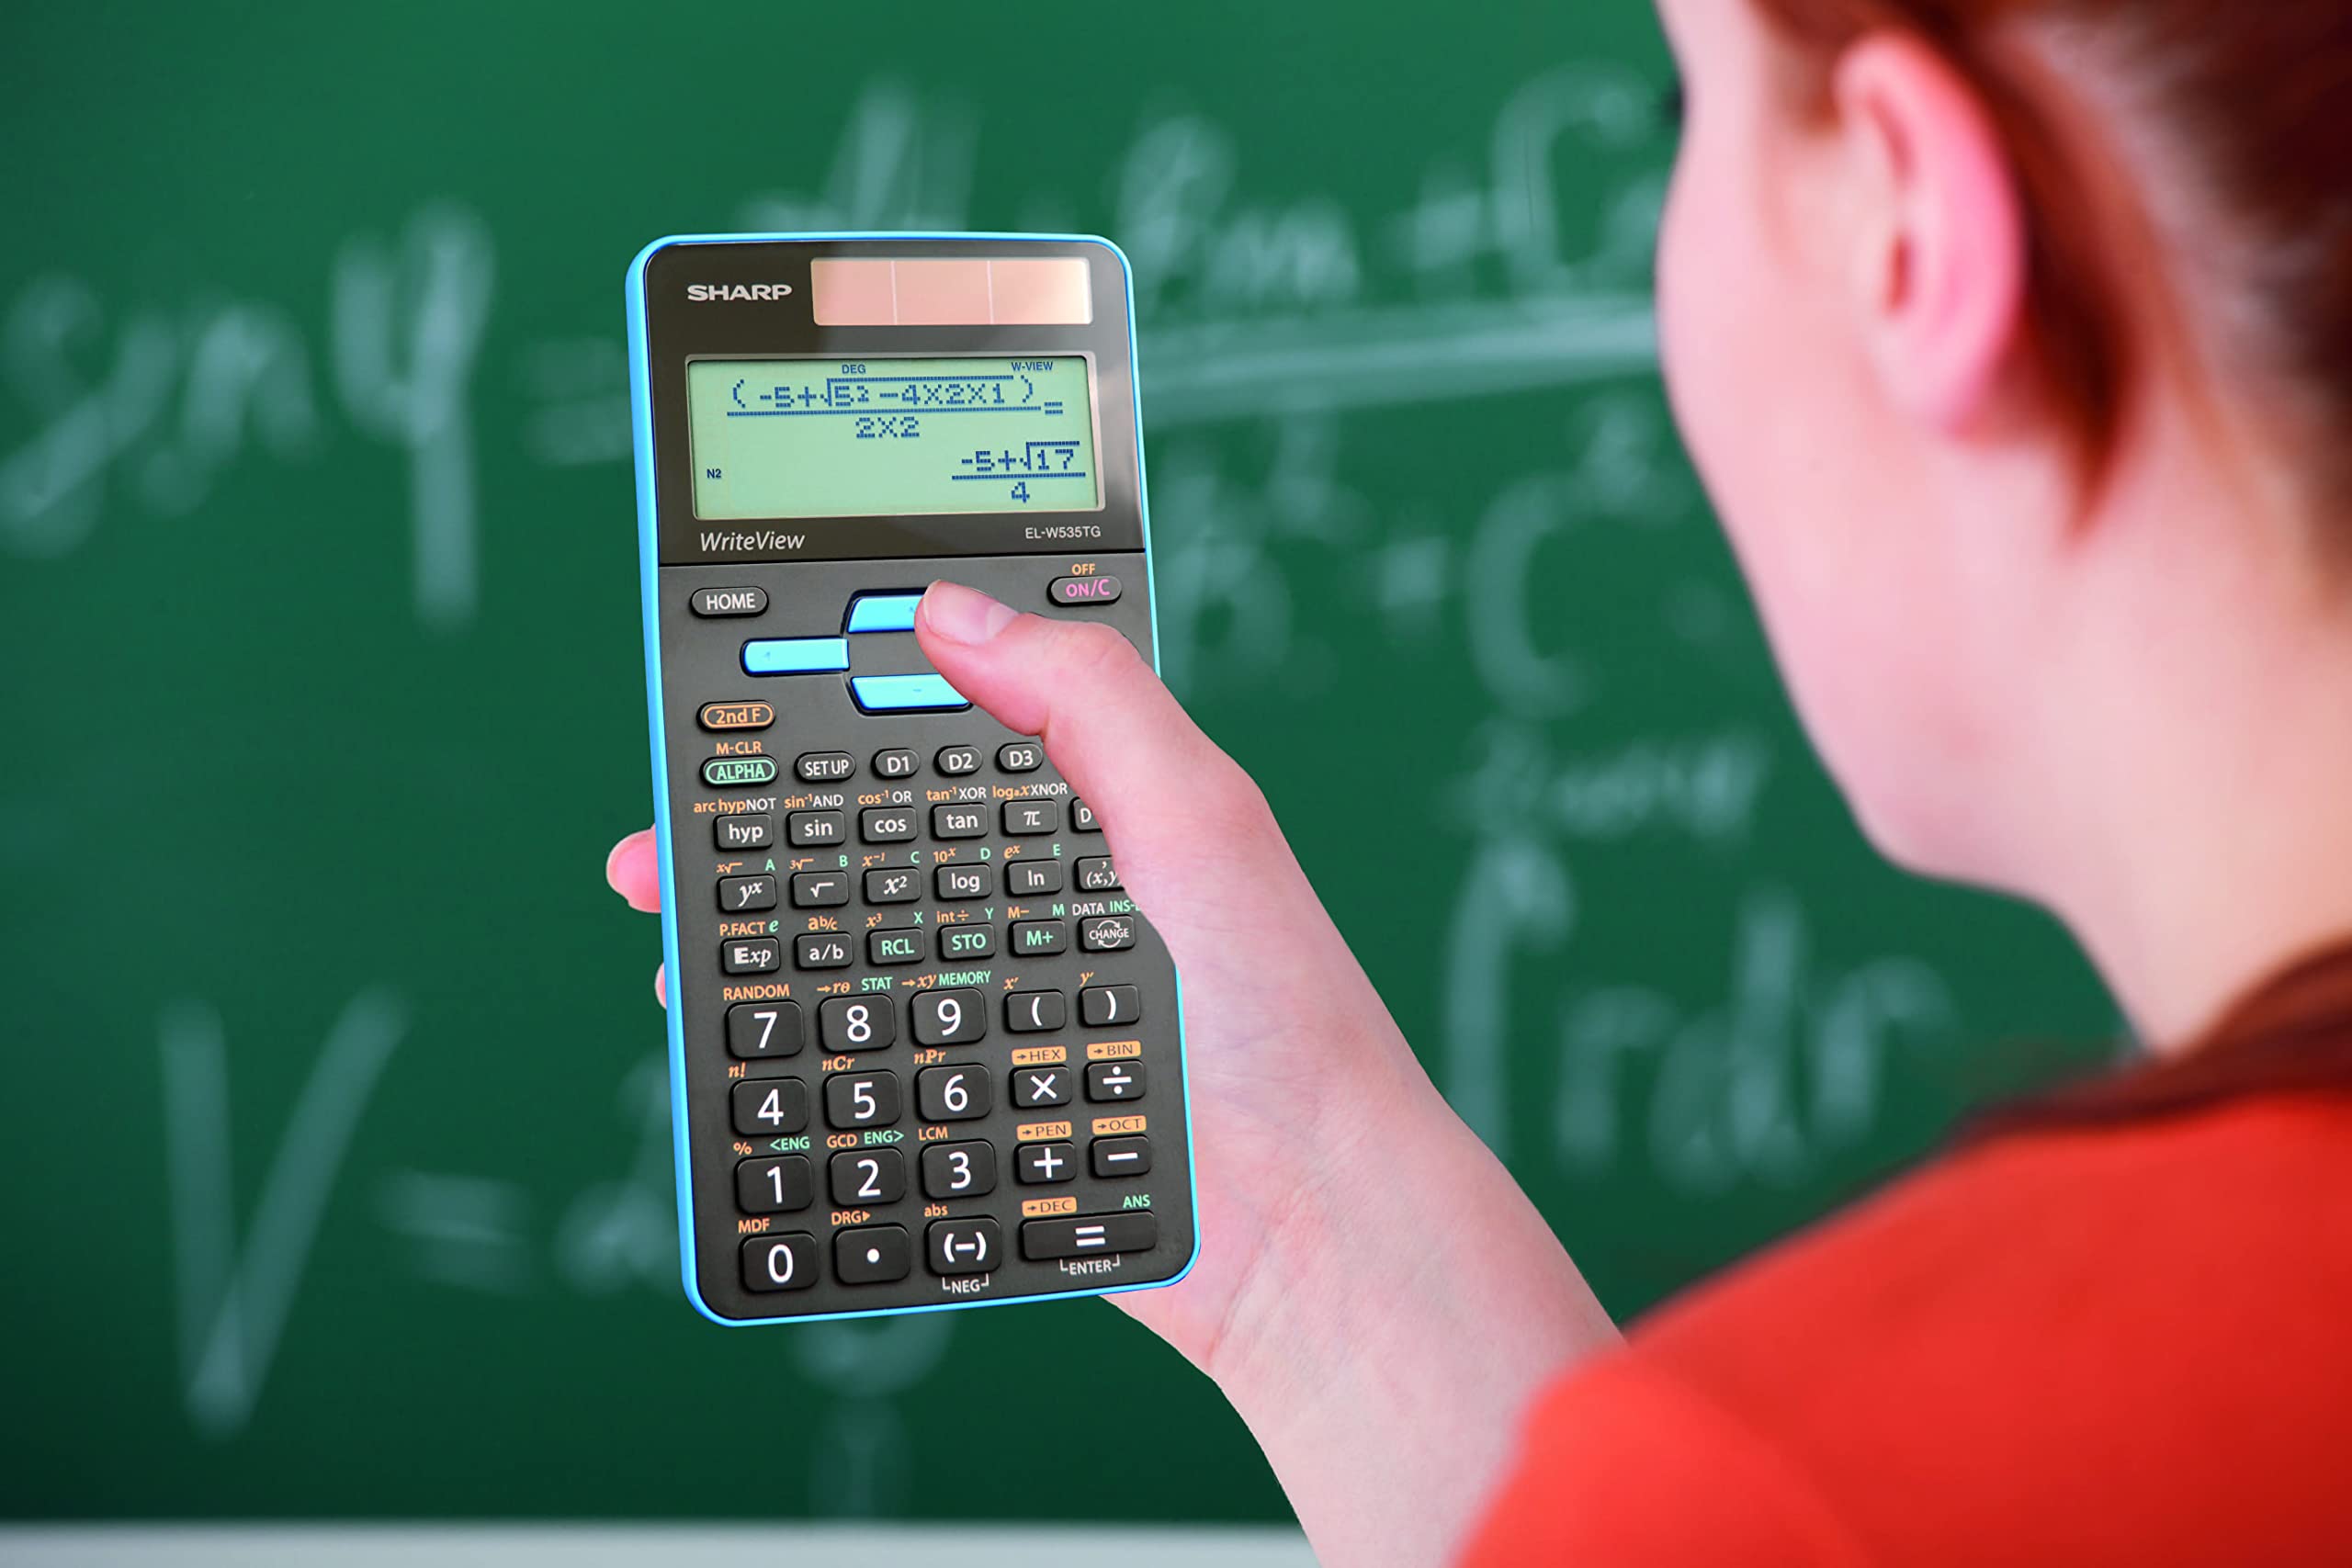 Sharp Calculators EL-W535TGBBL 16-Digit Scientific Calculator with WriteView, 4 Line Display, Battery and Solar Hybrid Powered LCD Display, Black & Blue, Black, Blue, 6.4